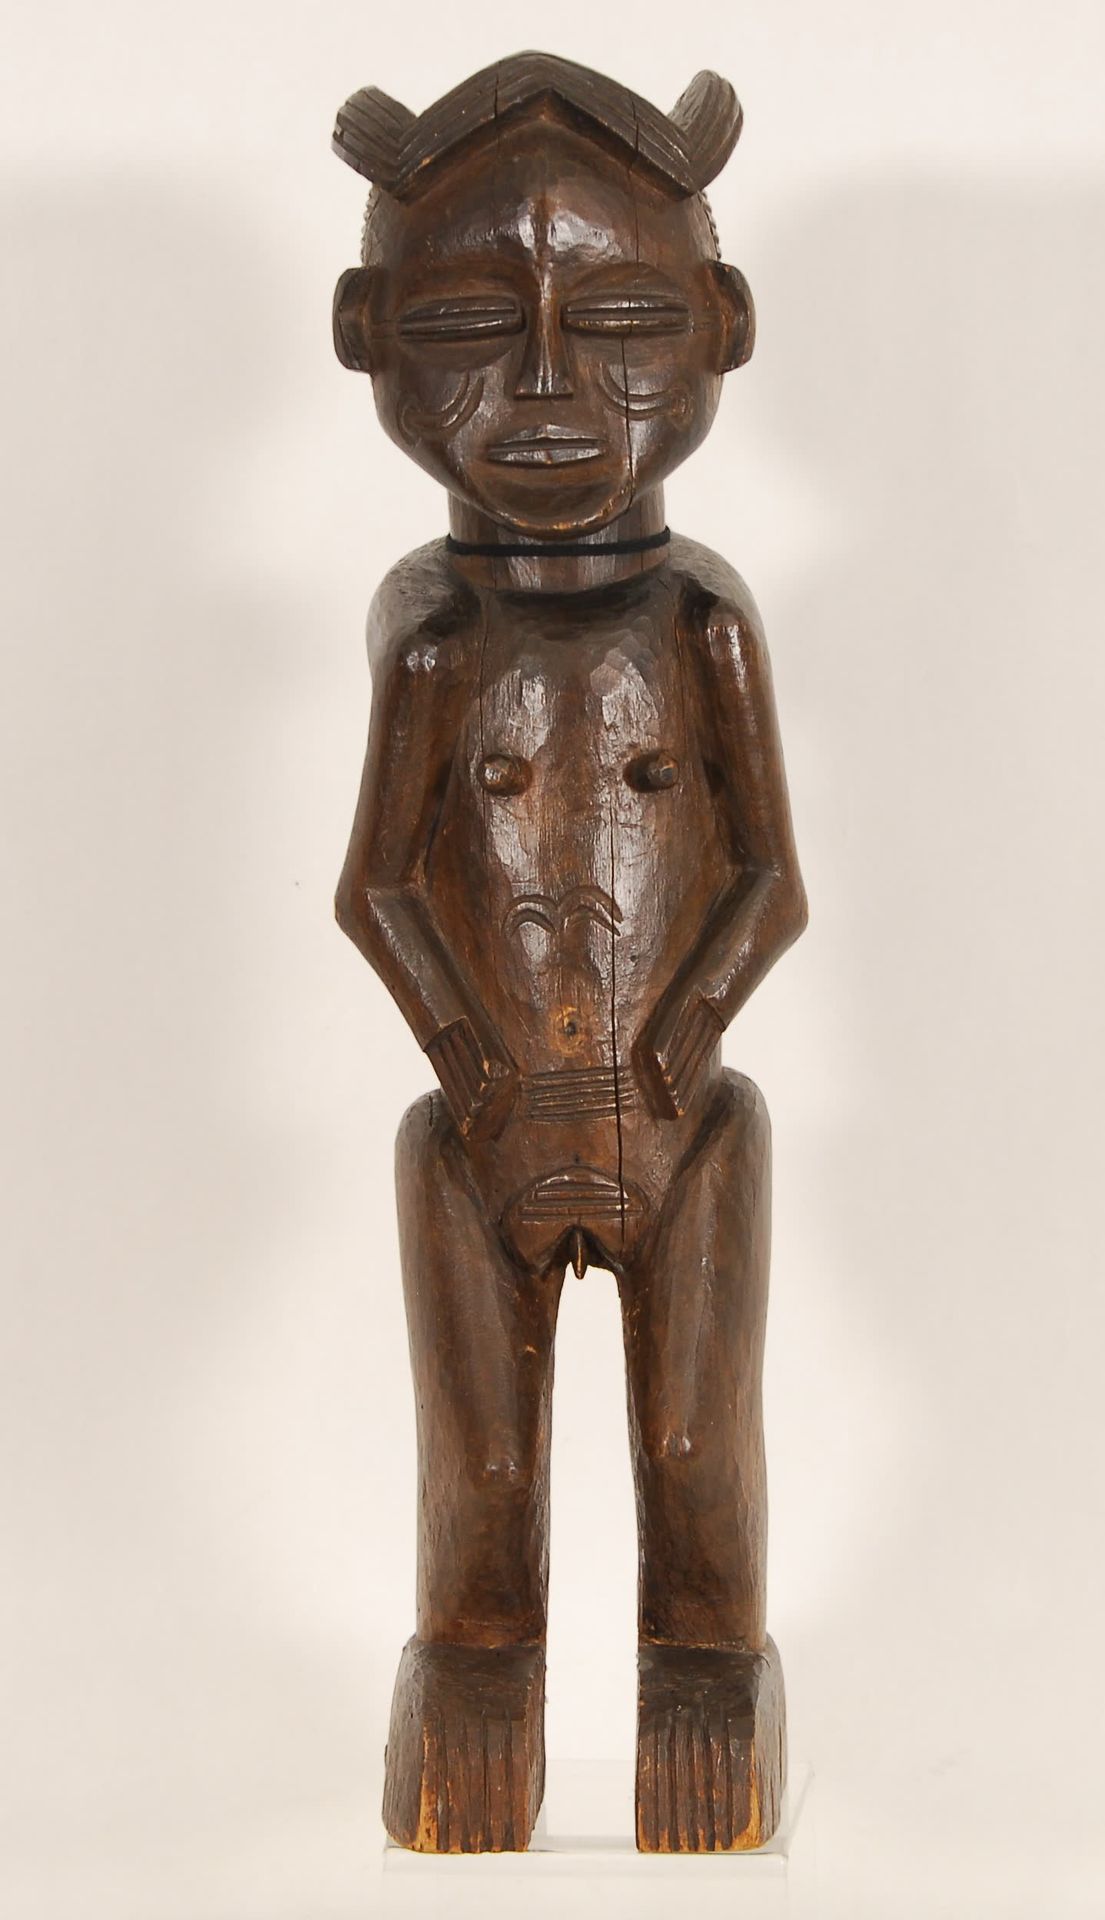 Afrique - Africa Statuette
Holzschnitzerei, Angola.
H. 48 cm.